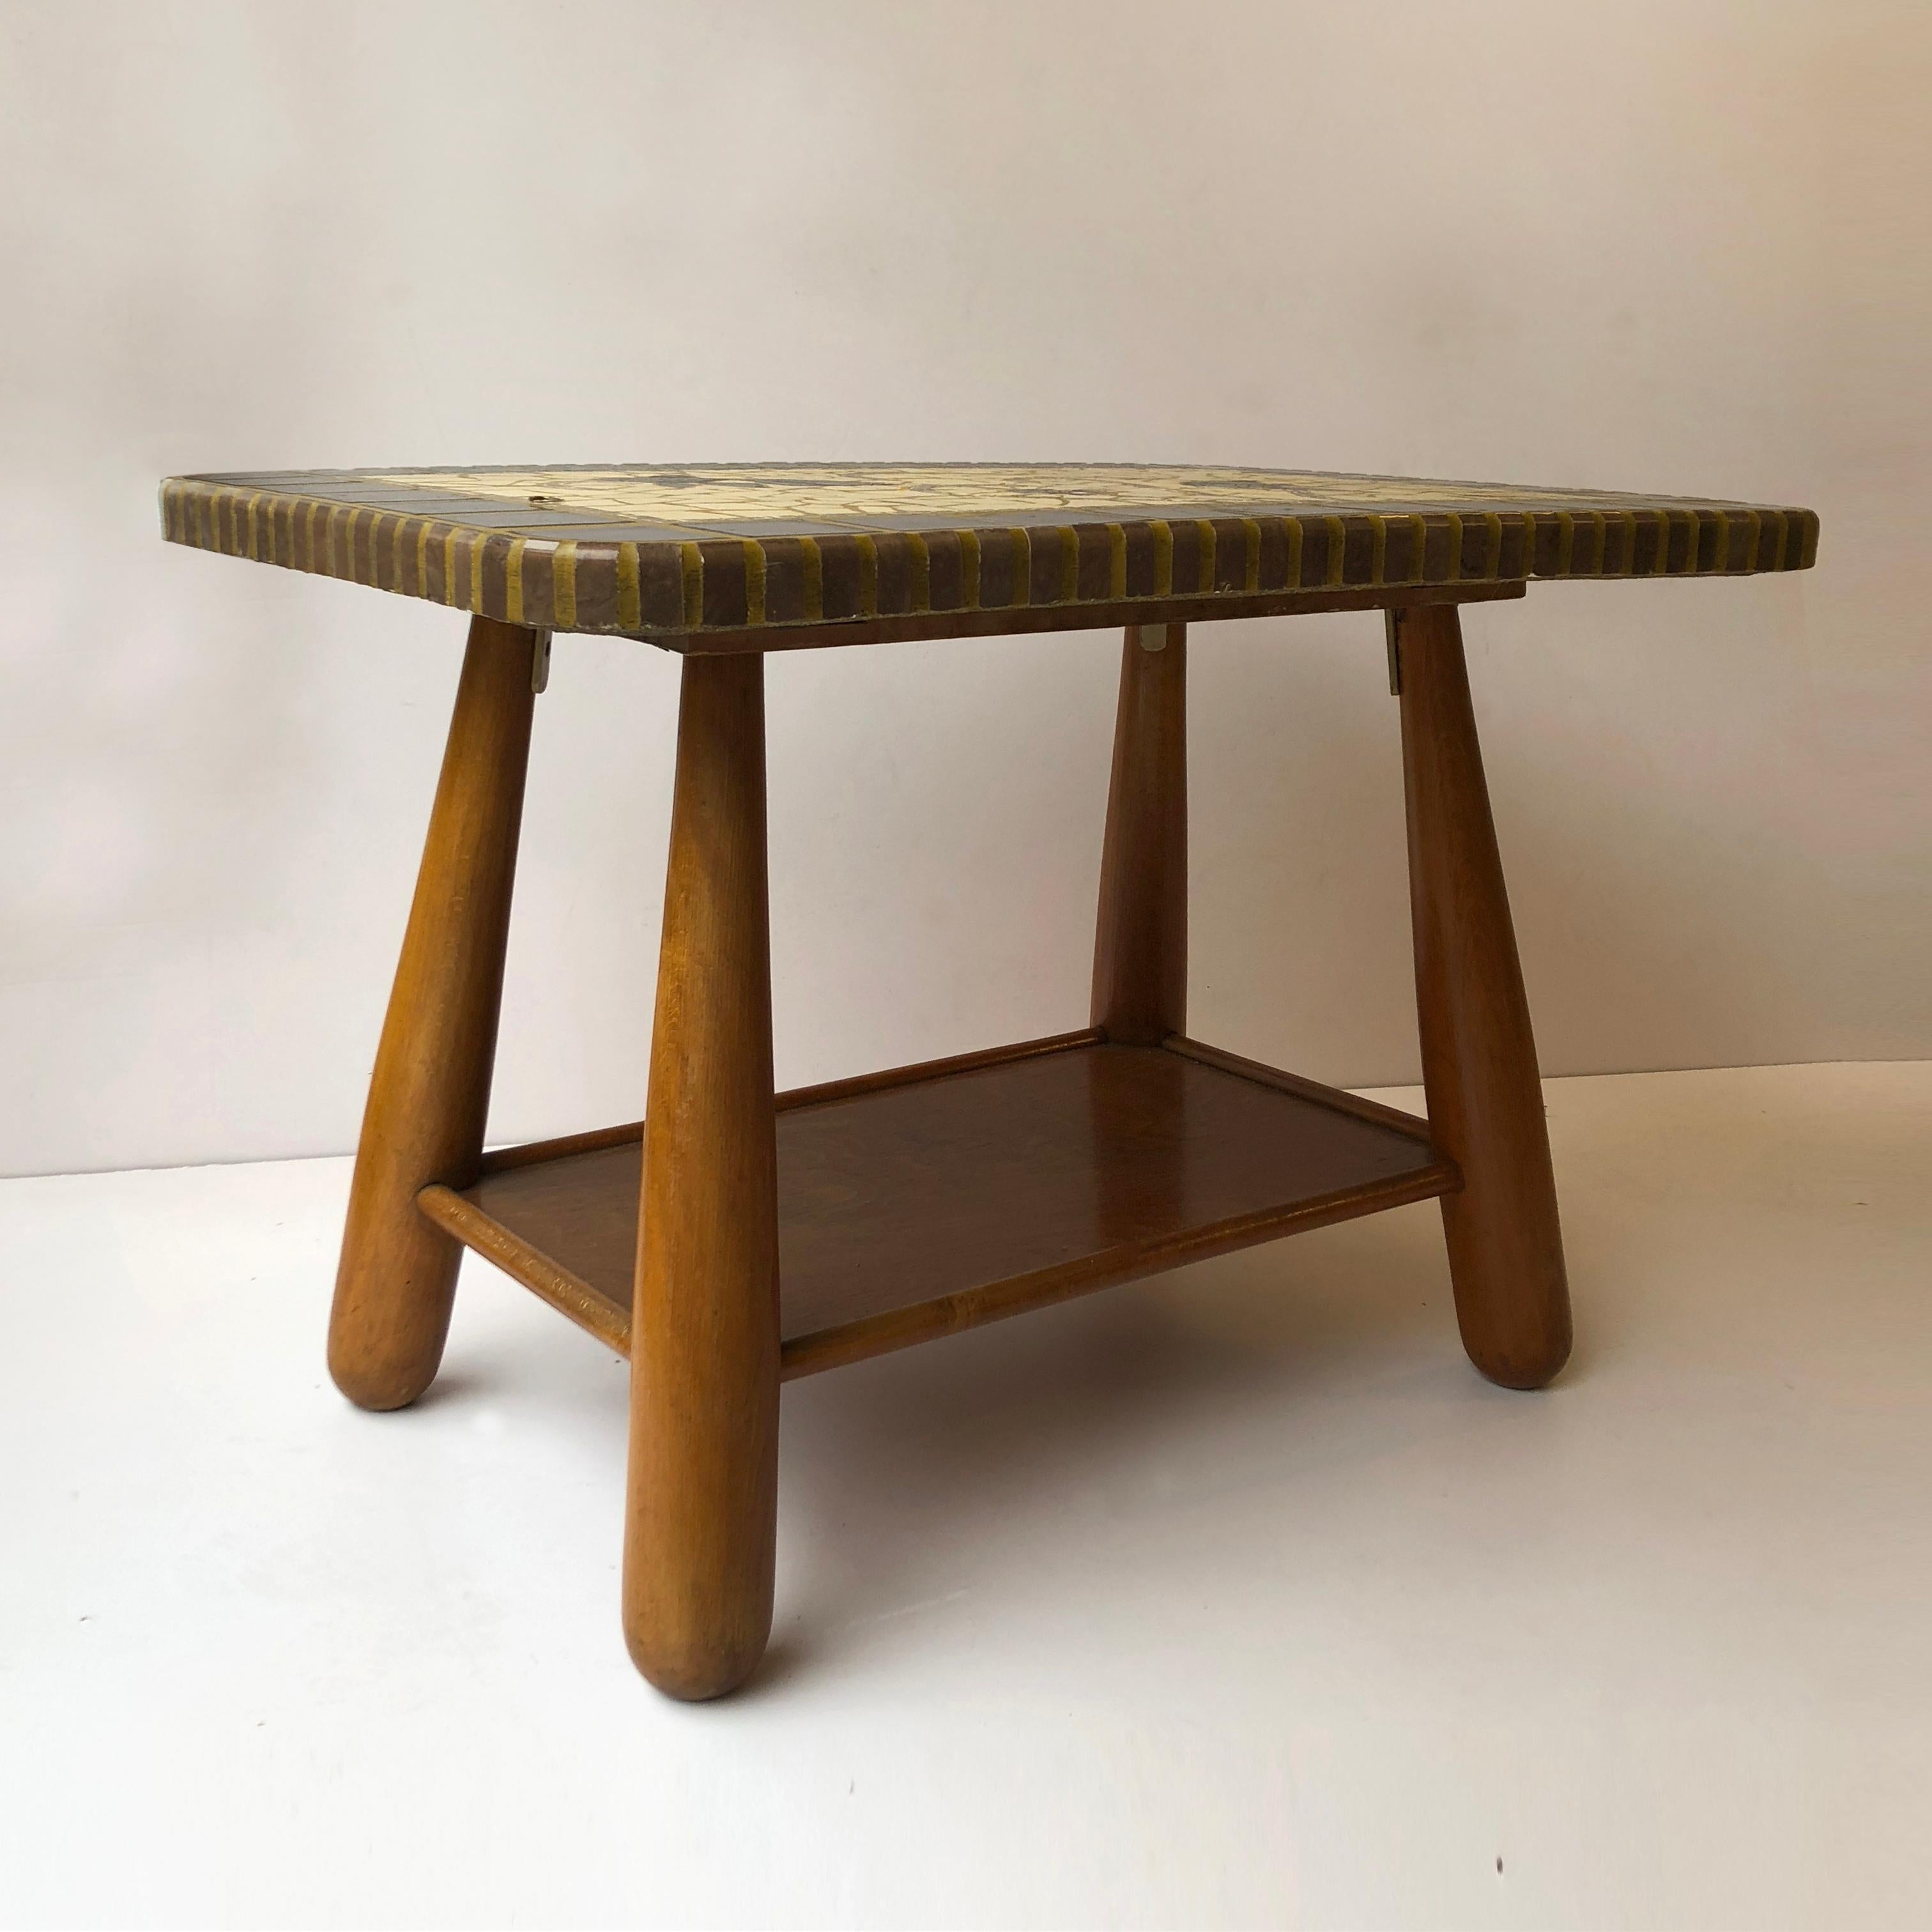 Beaux Arts Gueridon or Coffee Table by Otto Gunsen & Philip Arcanter, circa 1945-1950 For Sale